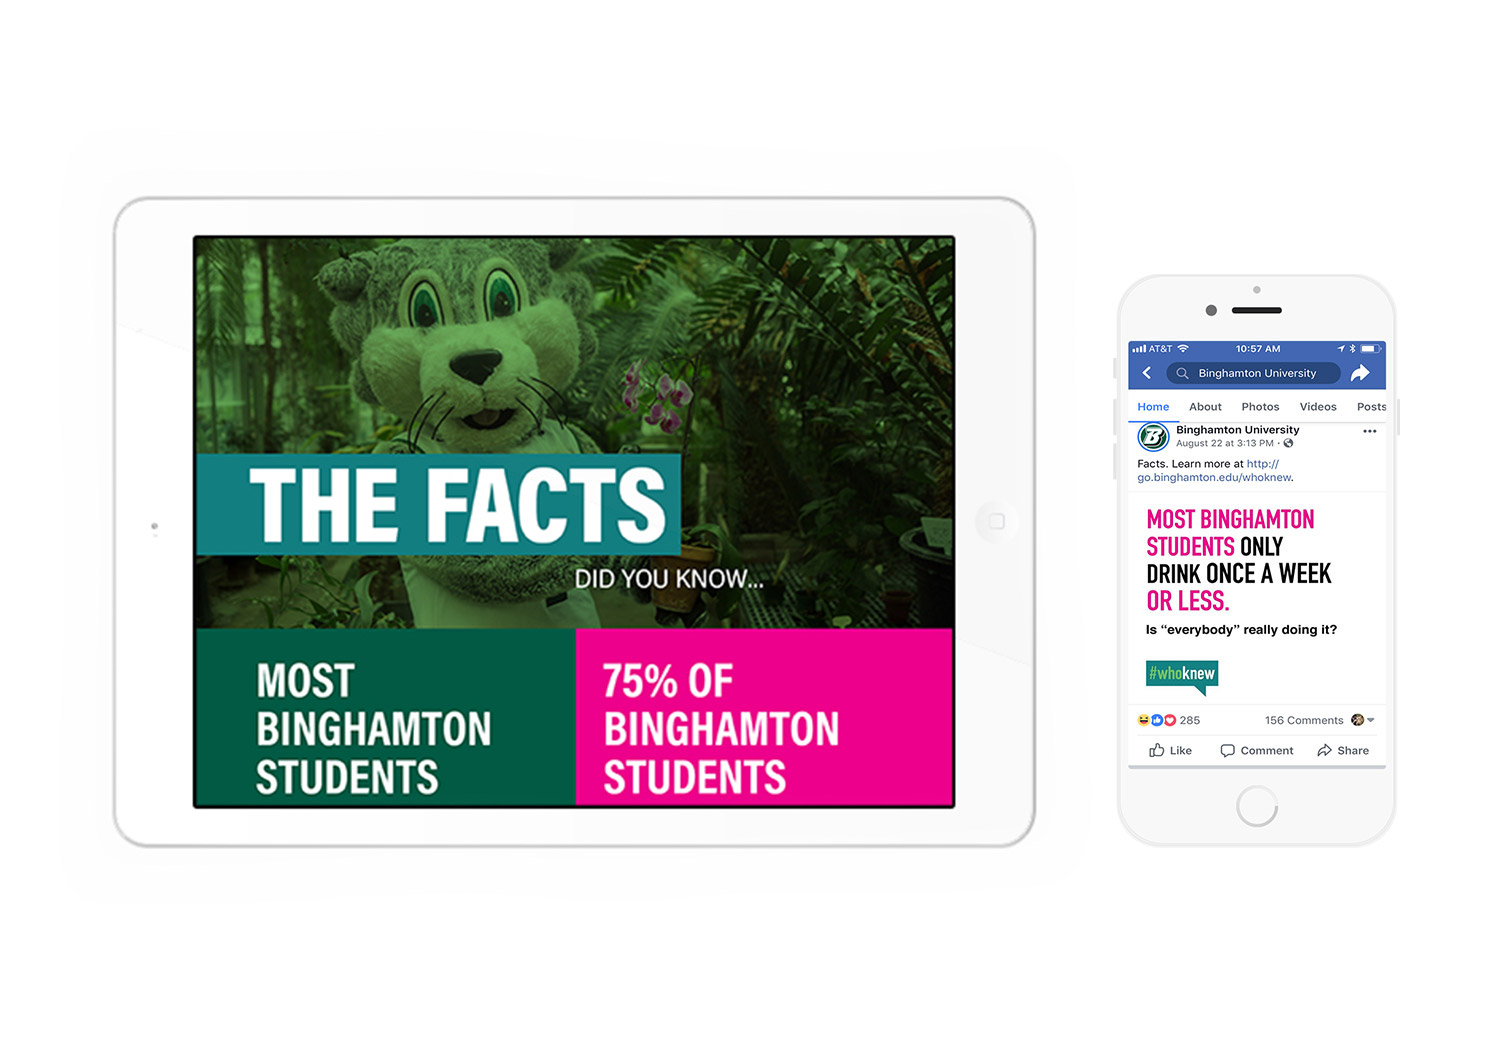 SUNY Binghamton social media campaign on iPad and iPhone